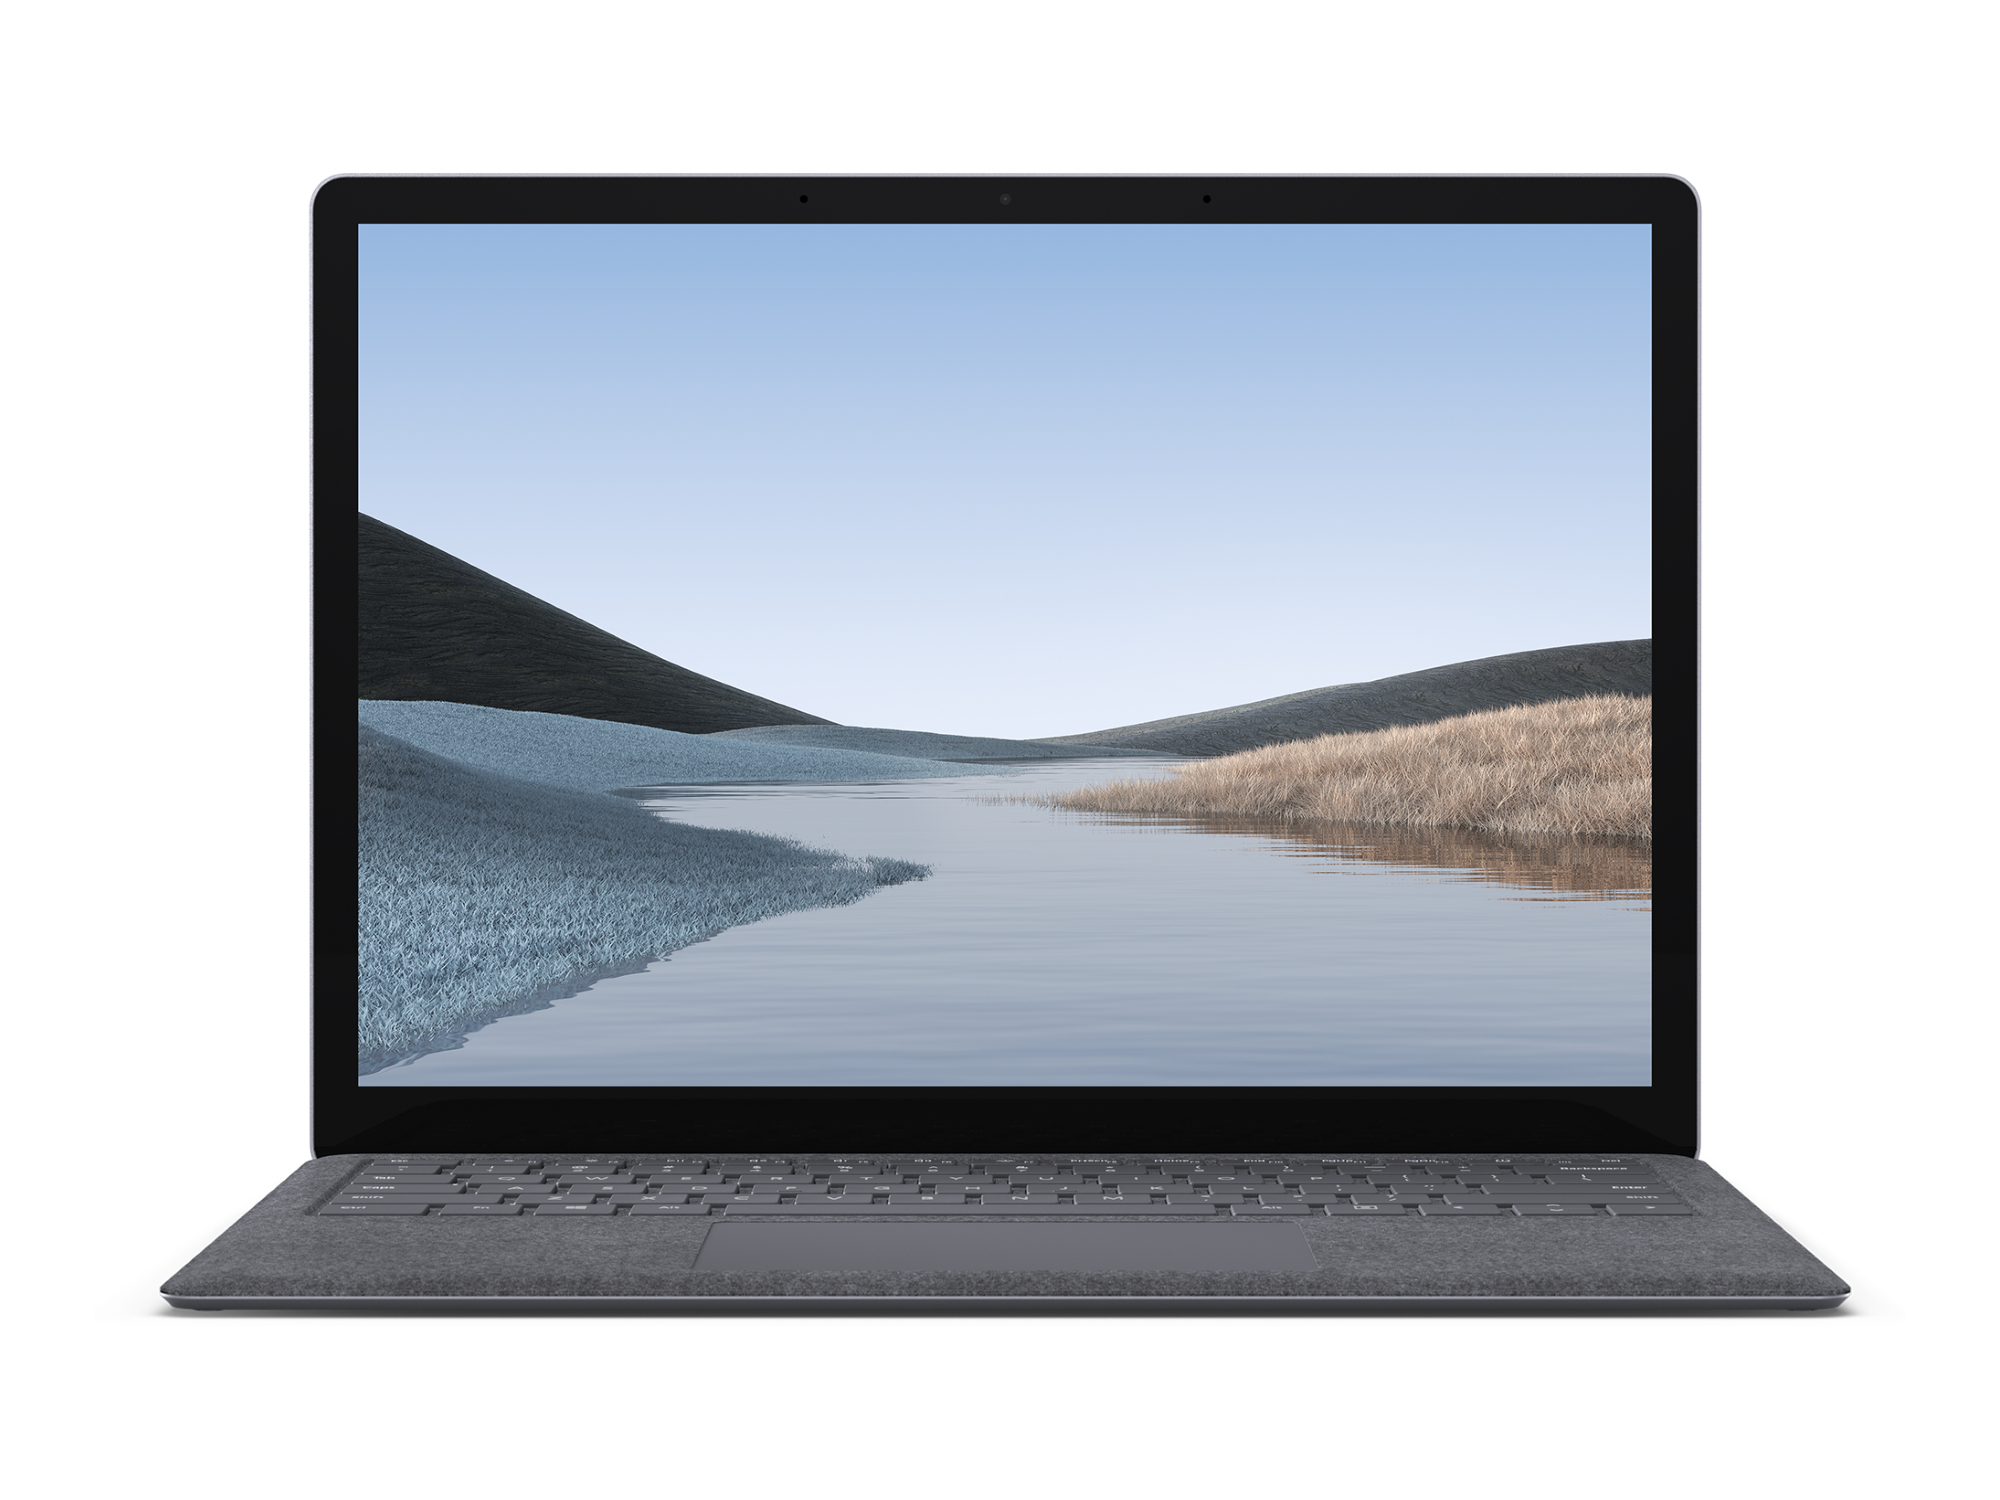 Microsoft Surface Laptop 3 i5-1035G7/8GB/128GB SSD/13.5-inch Pixel Sense/Windows 10/Platinum Fabric